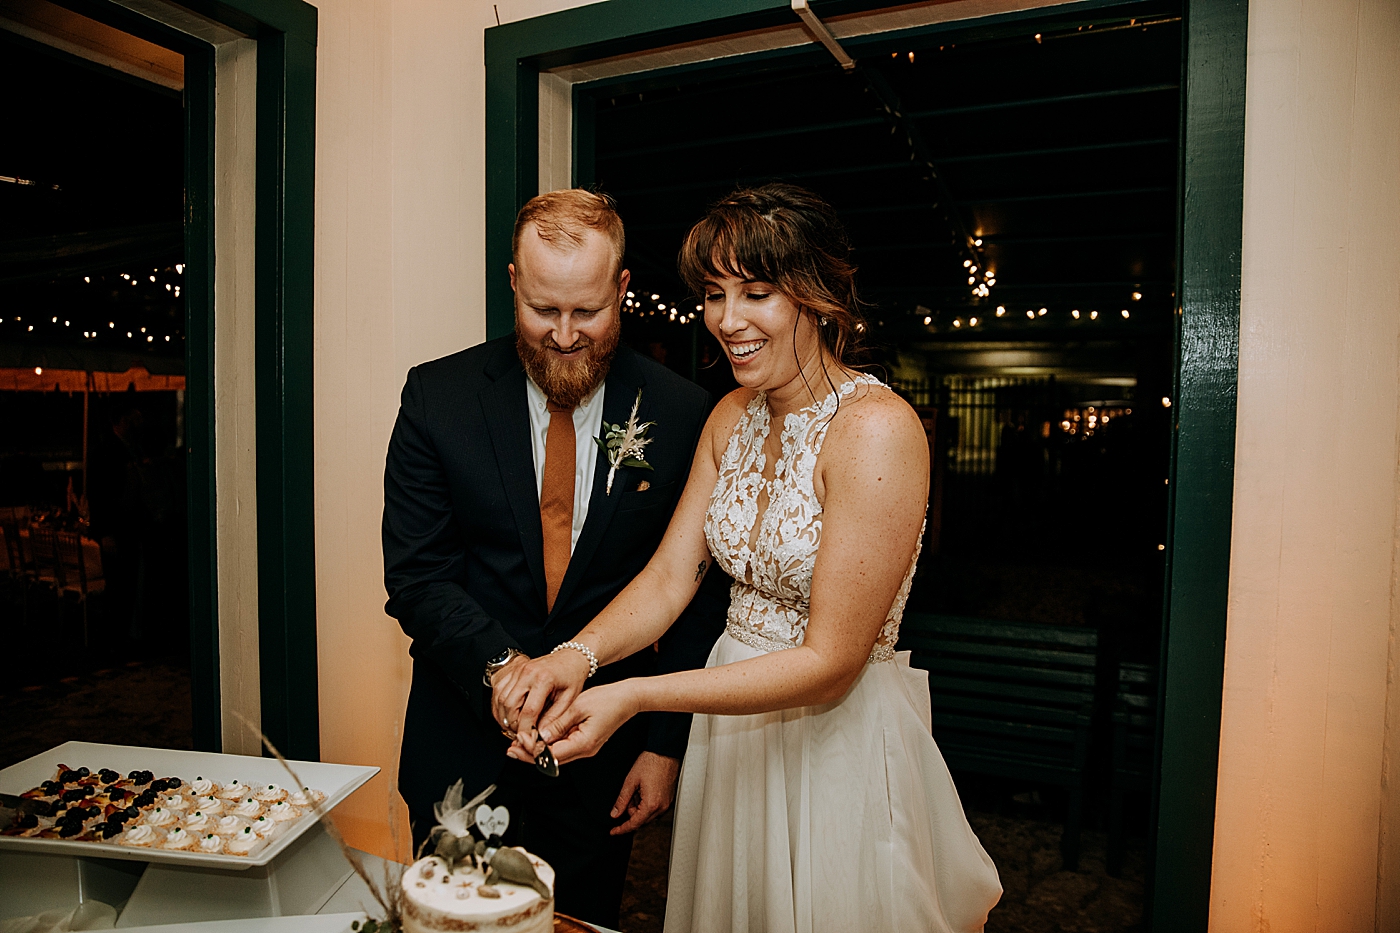 Cake cutting Historic Stranahan House Wedding Photography captured by South Florida Wedding Photographer Maggie Alvarez Photography